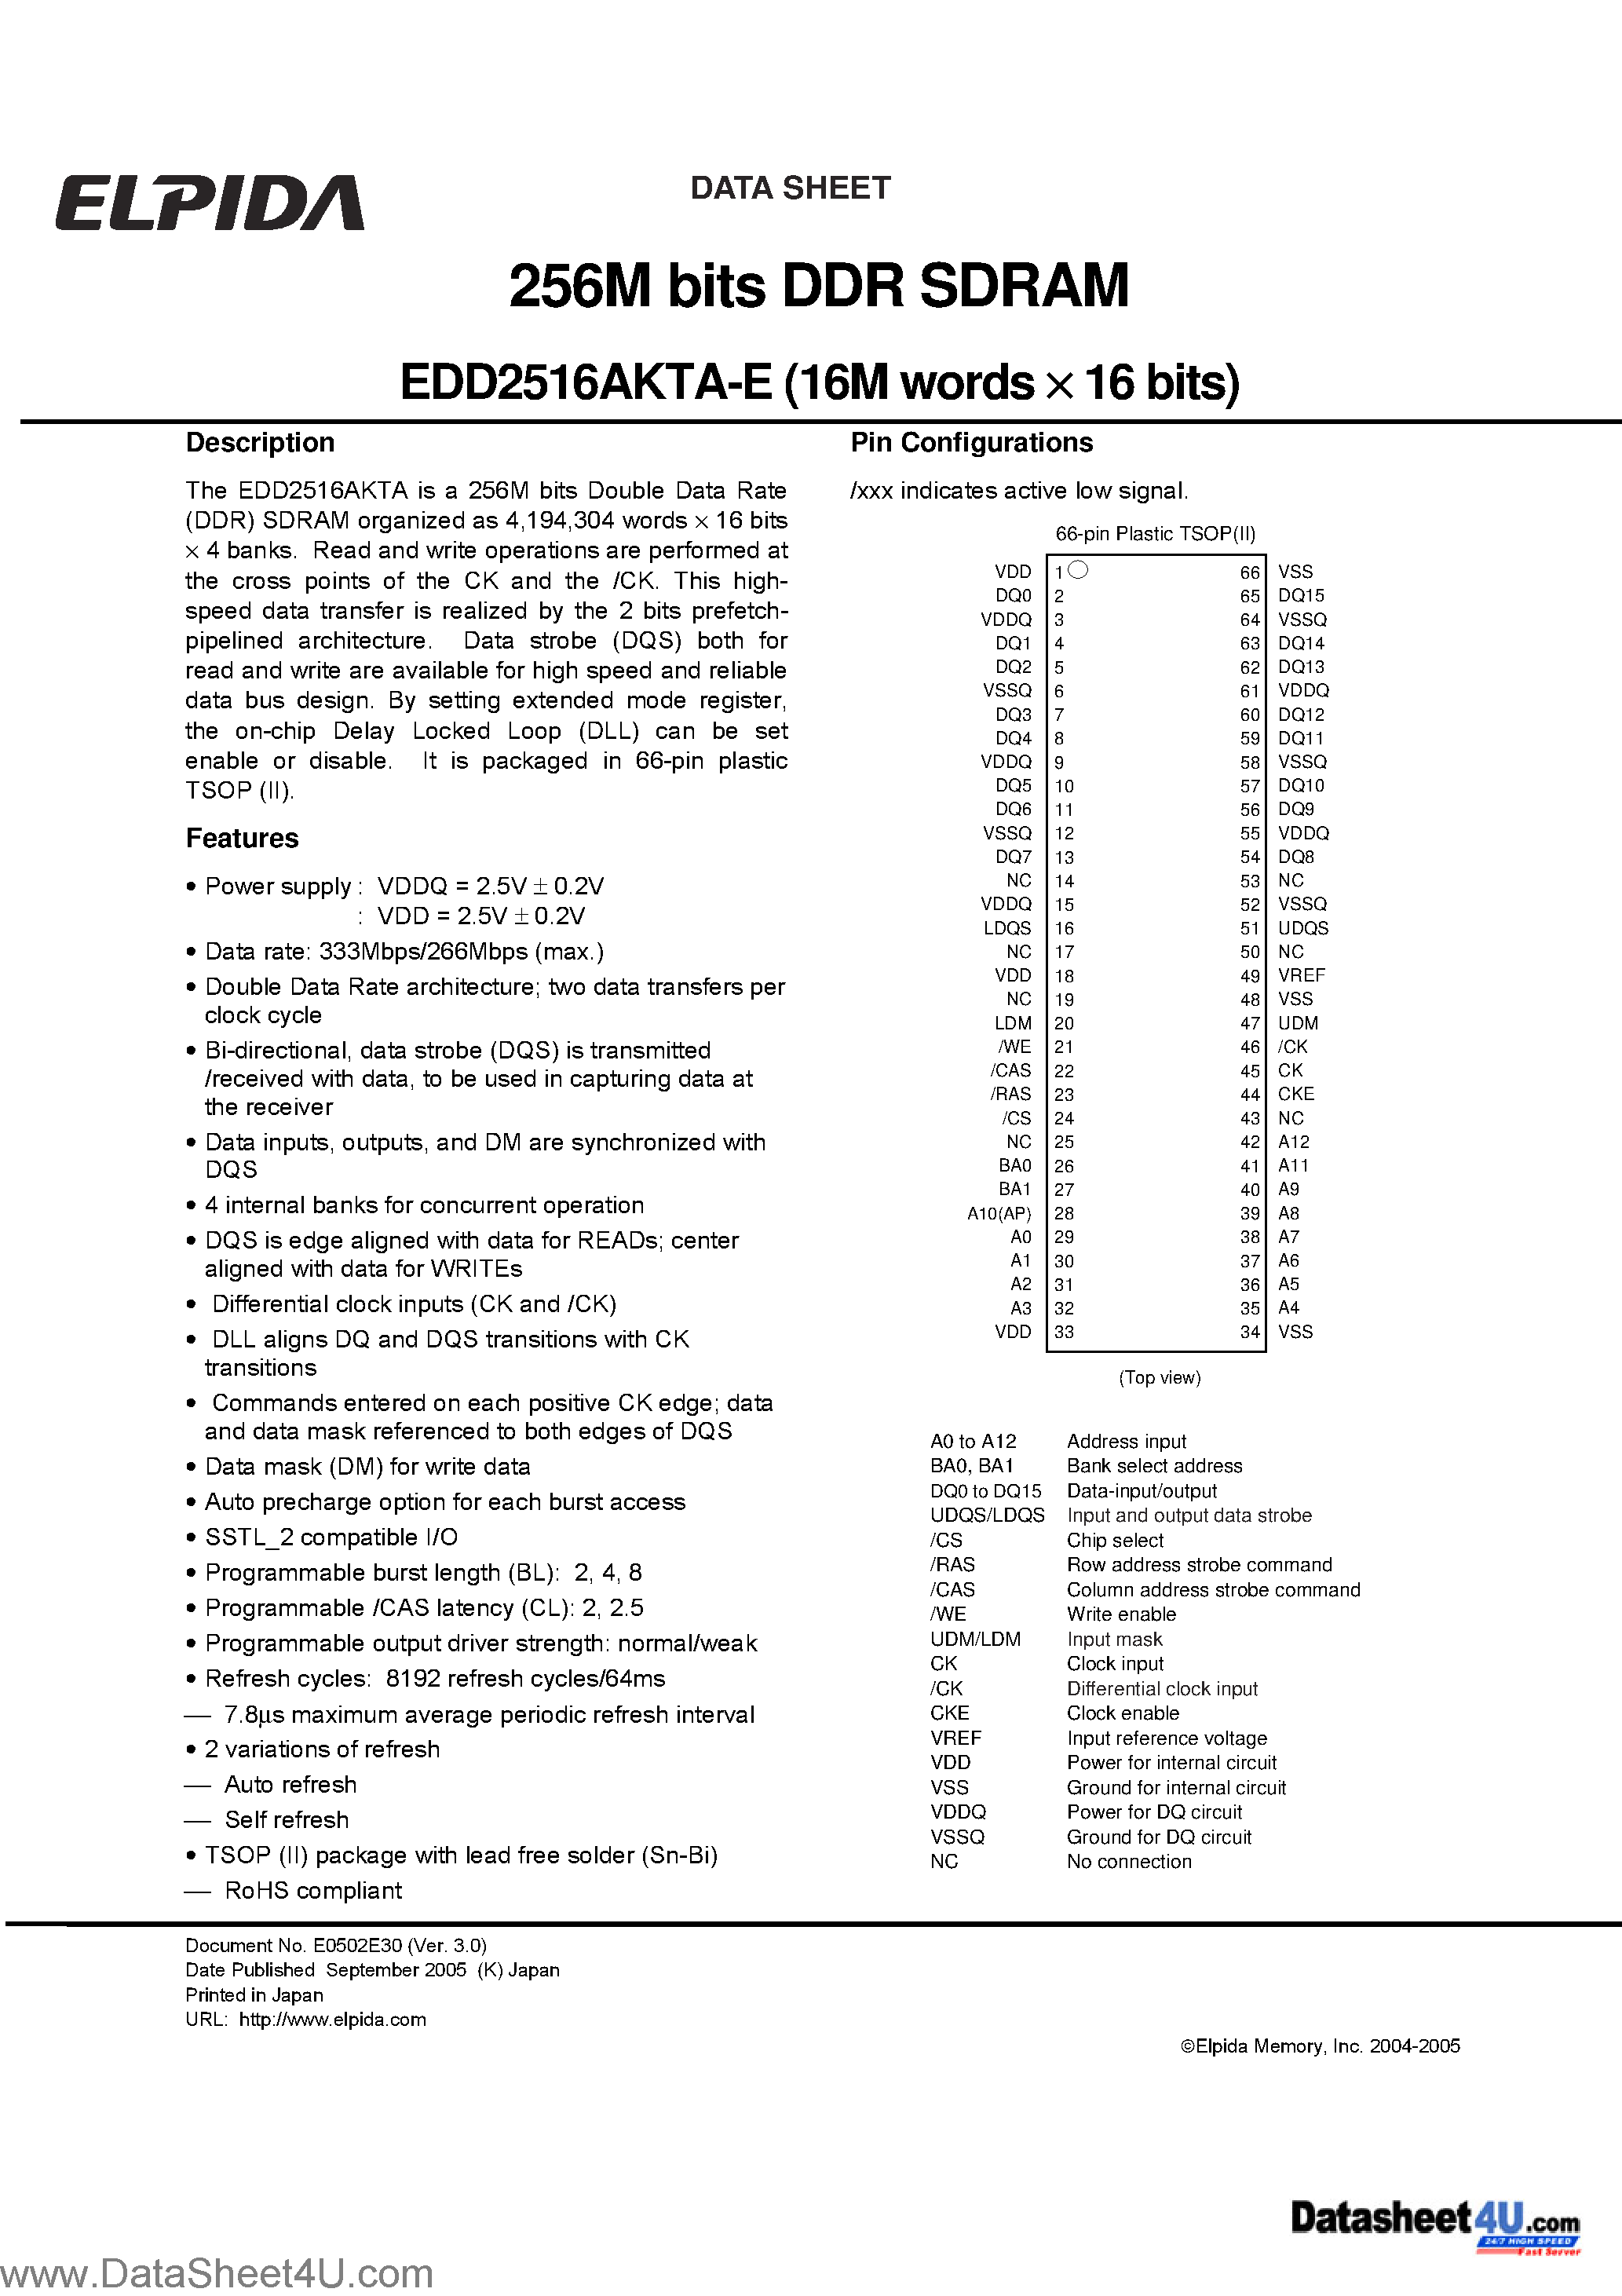 Datasheet EDD2516AKTA-E - 256M bits DDR SDRAM (16M words x16 bits DDR400) page 1